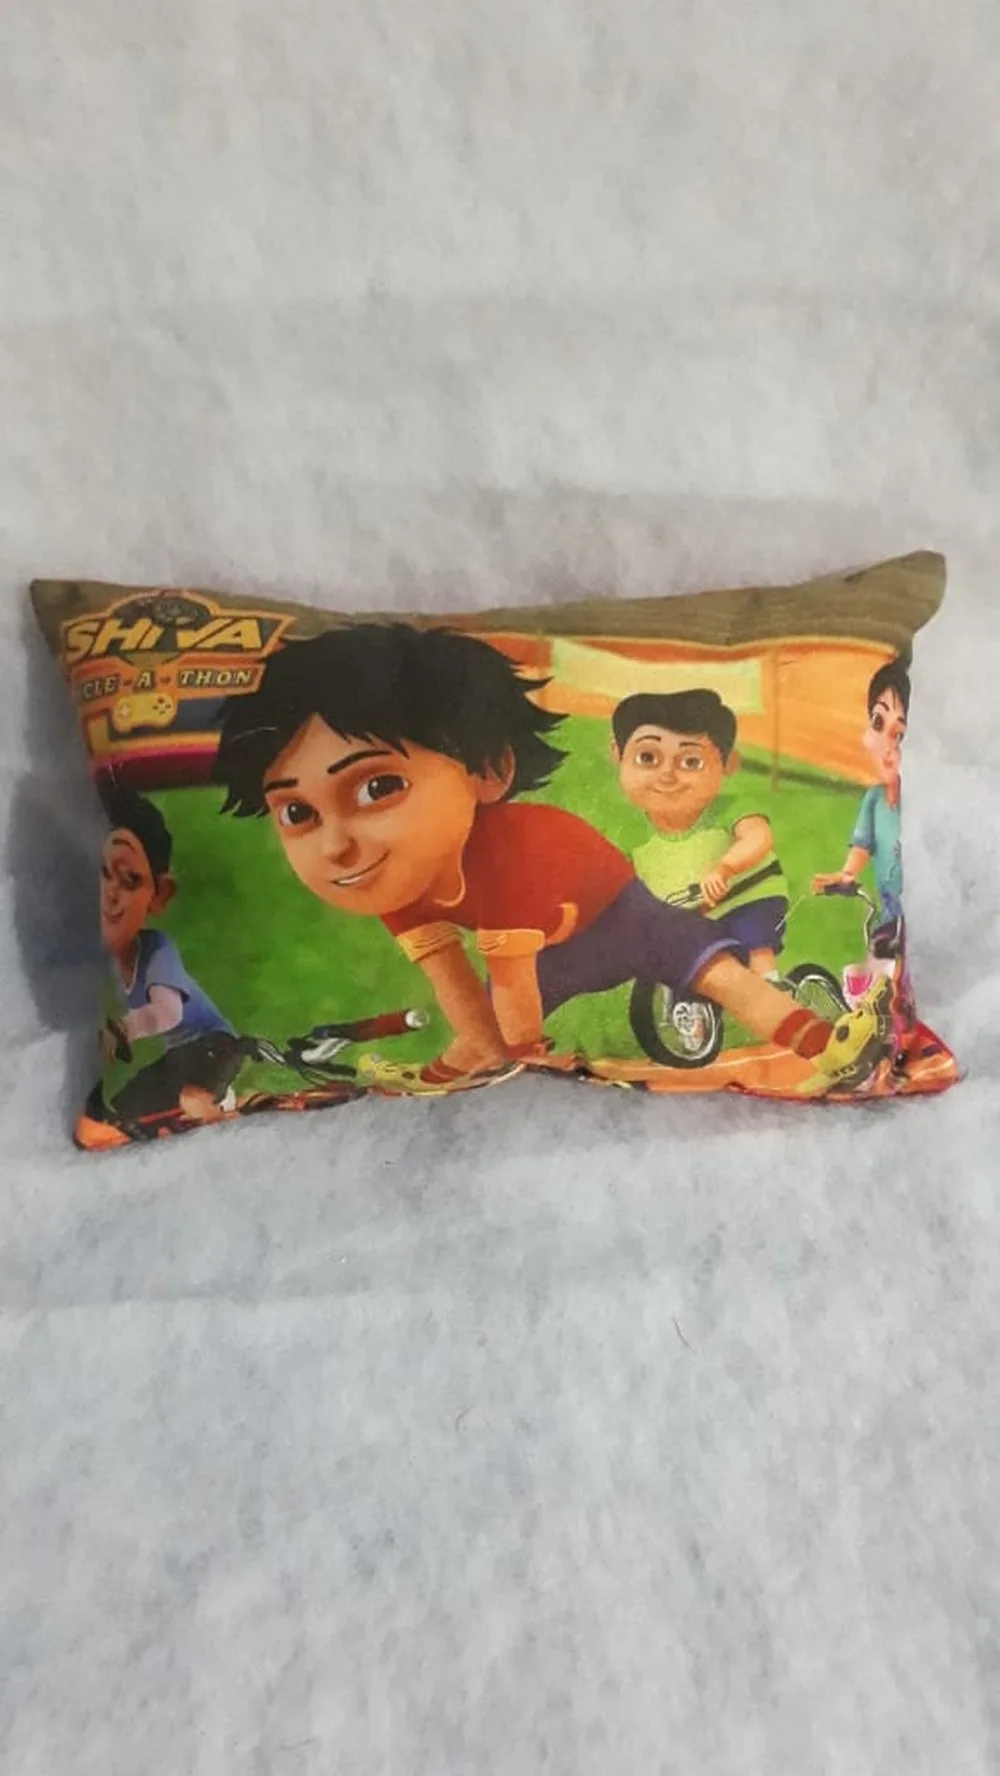 Kids Cartoon Pillow Shiva, 11x17, 1 Piece, Colorful